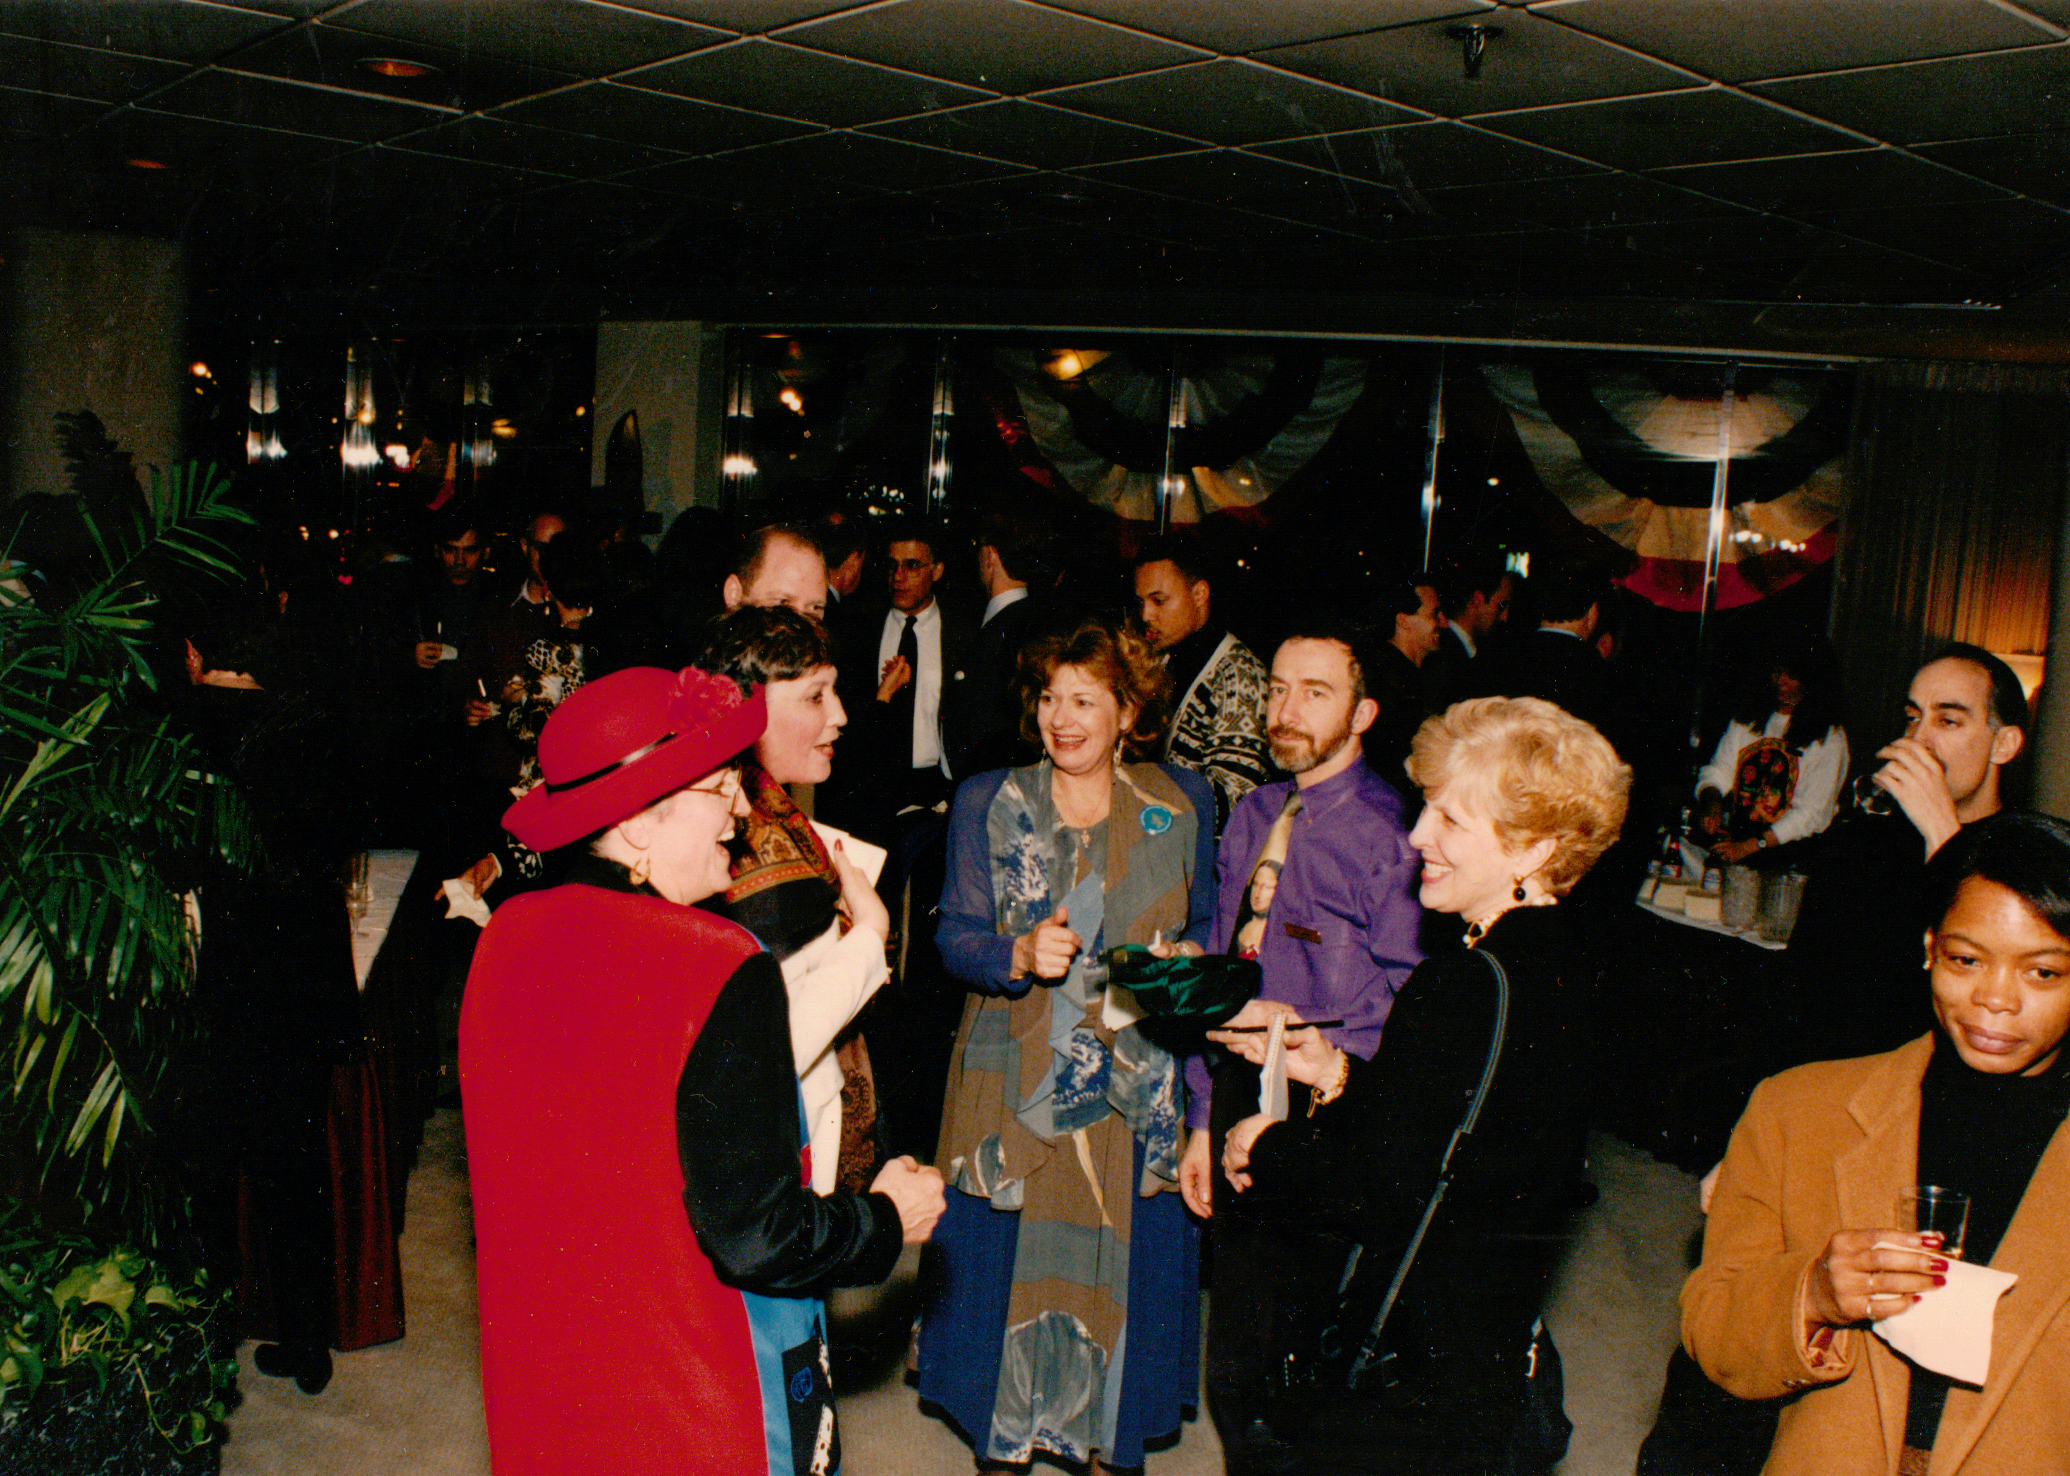 Presidential Inaugural Art Exhibit, 1992